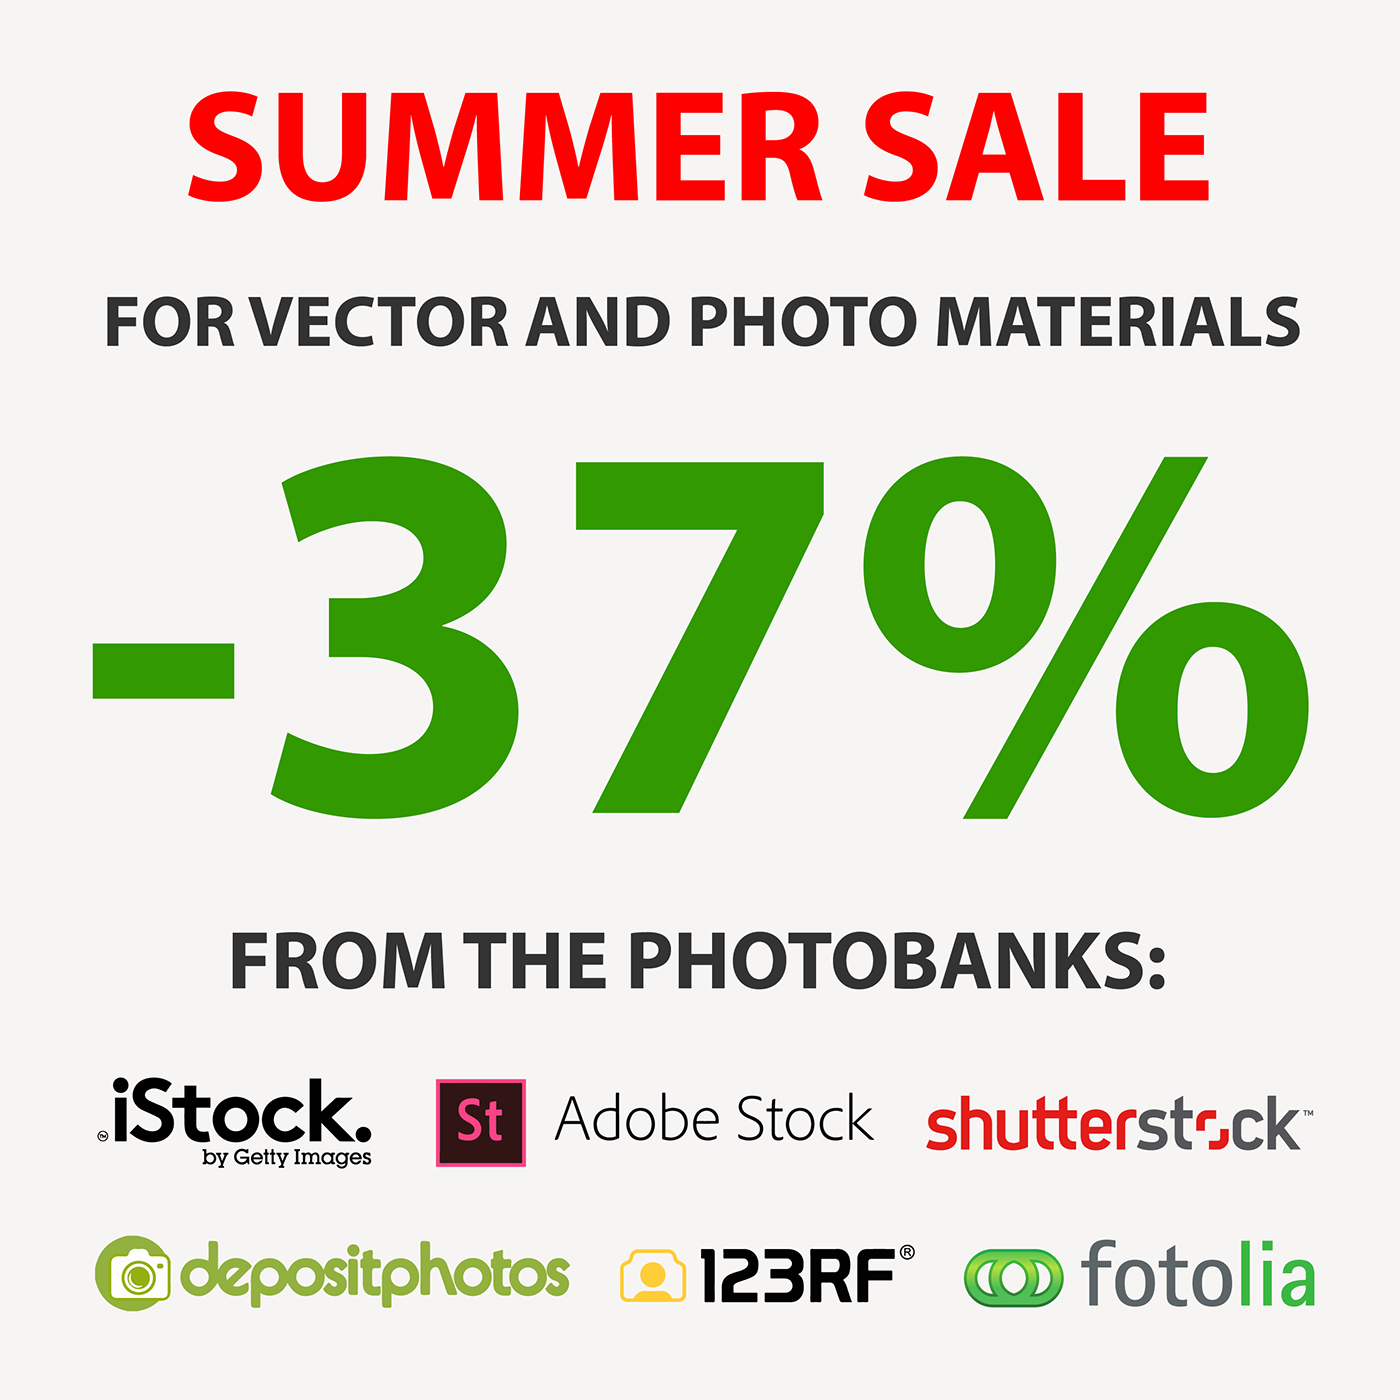 Cromatix creative image lab chisinau moldova summer sale Shutterstock fotolia adobe stock 123RF depositphoto istock